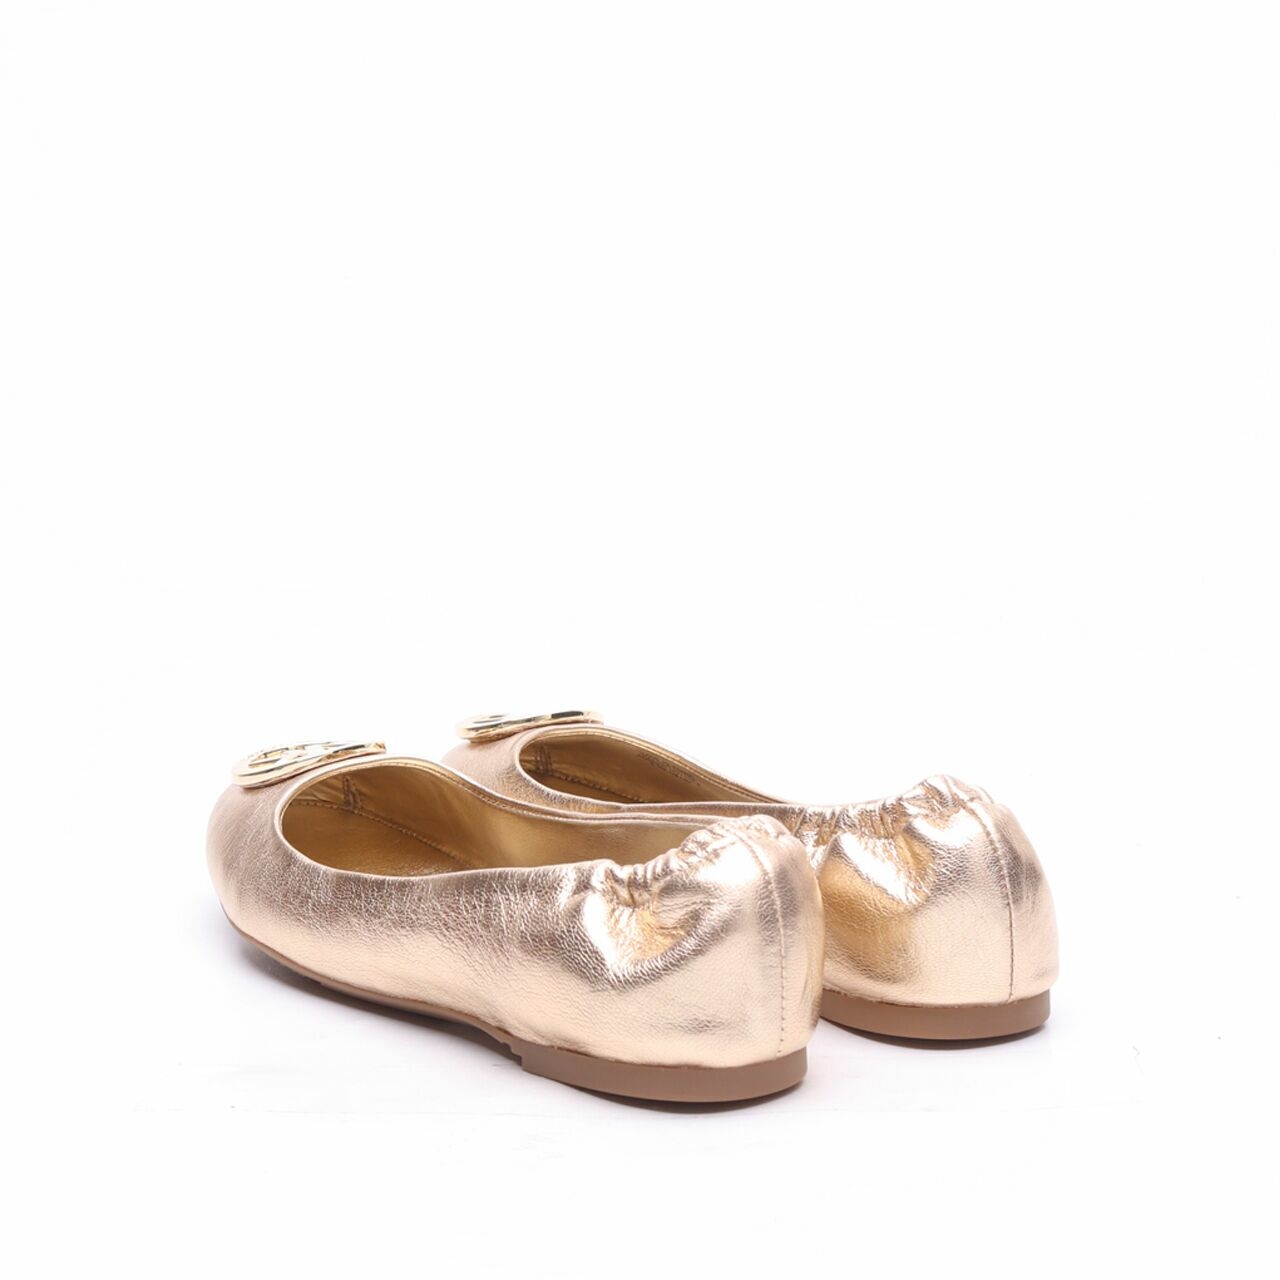 Michael Kors Lindsay Ballet Pale Gold Flat Shoes